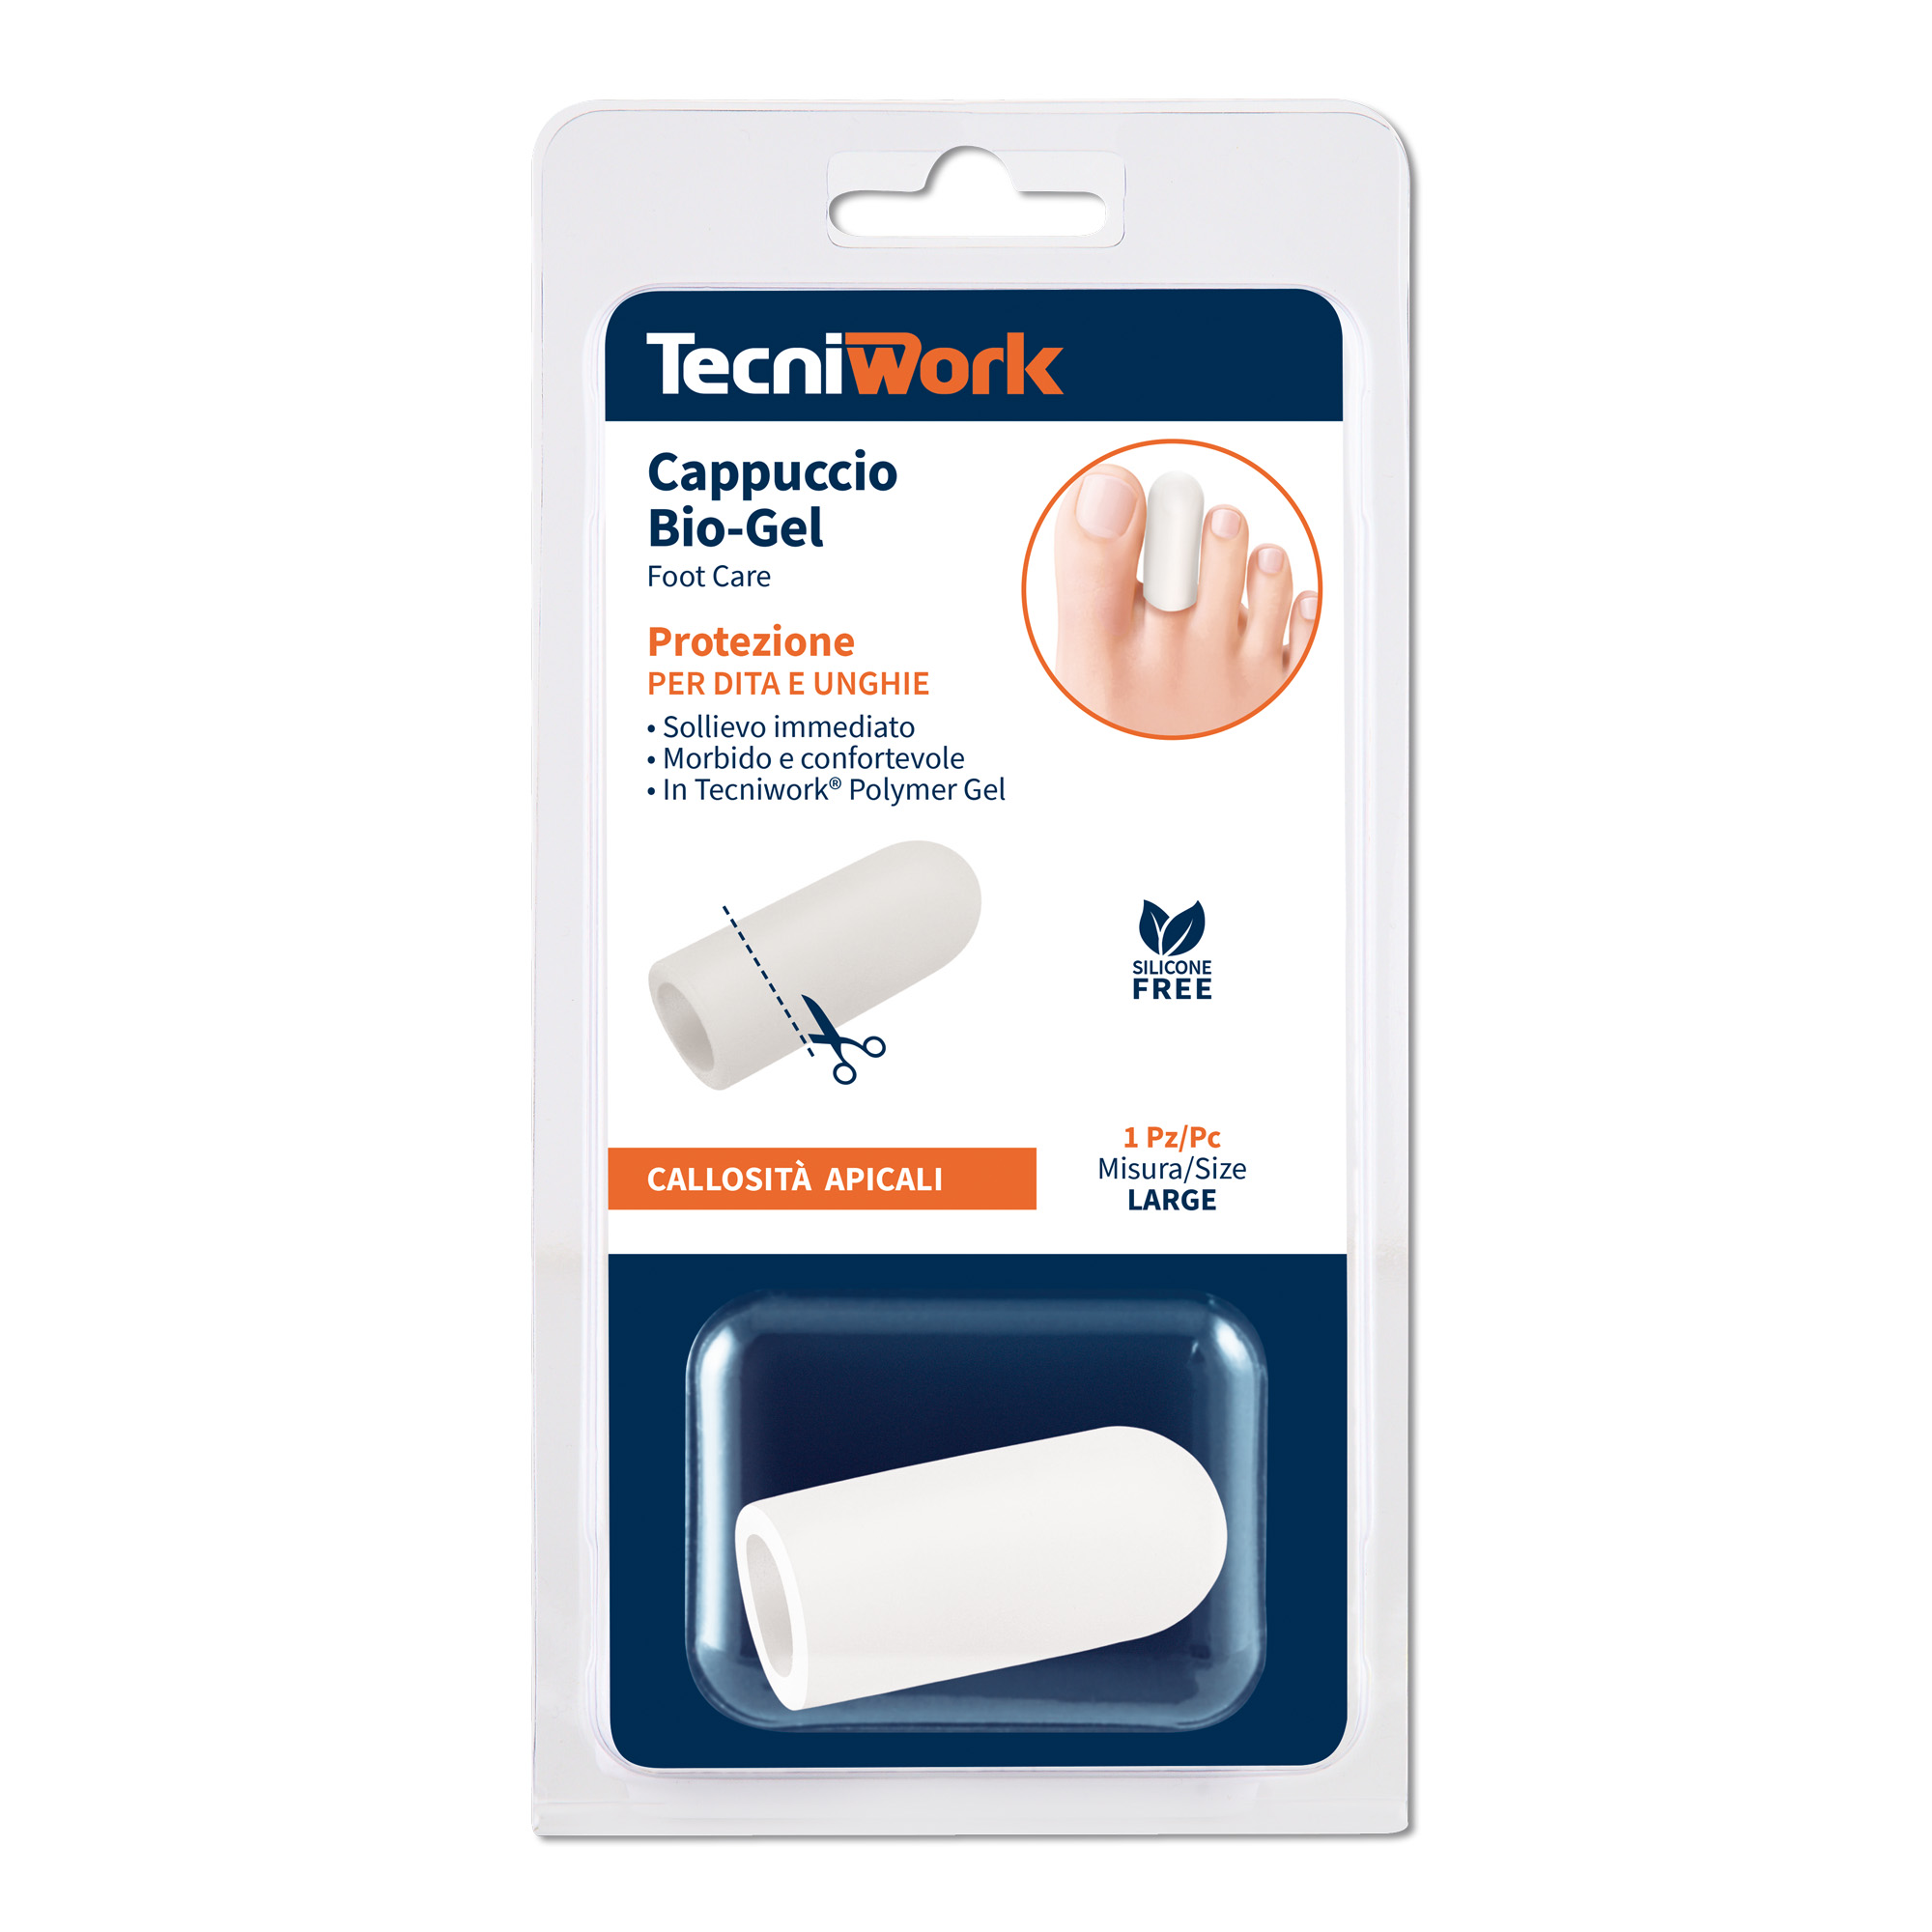 Bio-Gel toe protector made of transparent Tecniwork® Polymer Gel size Large 1 pc